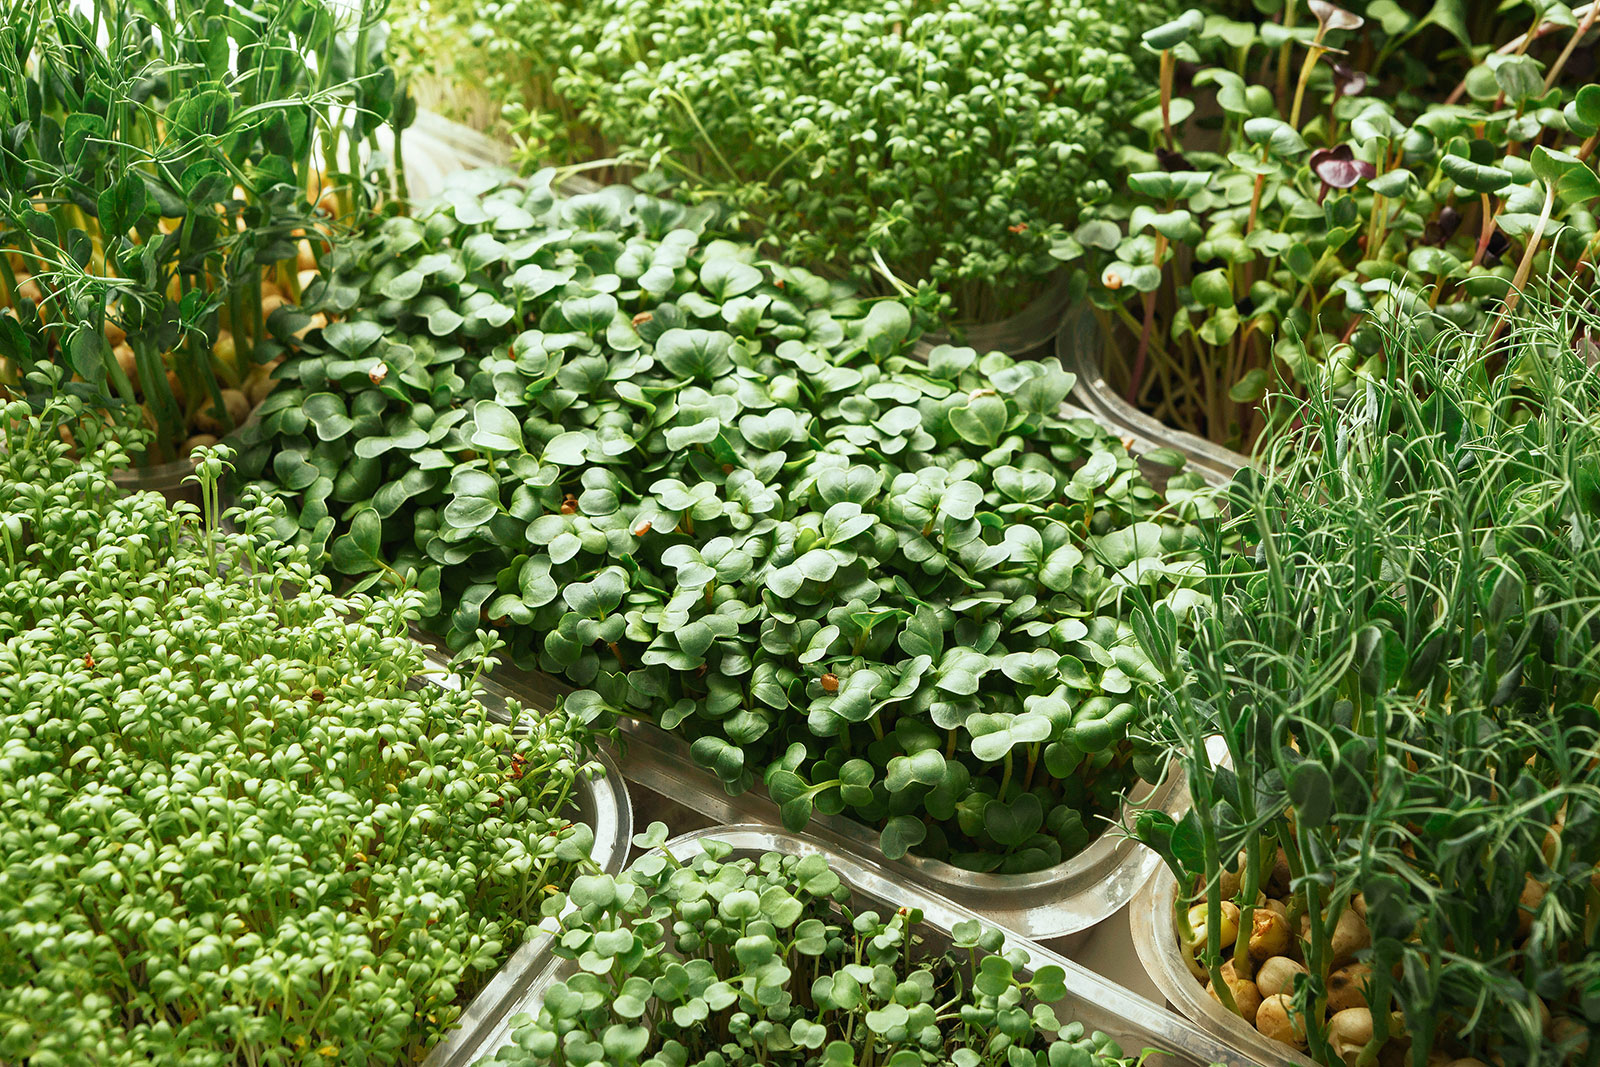 Trays full of microgreens growing indoors